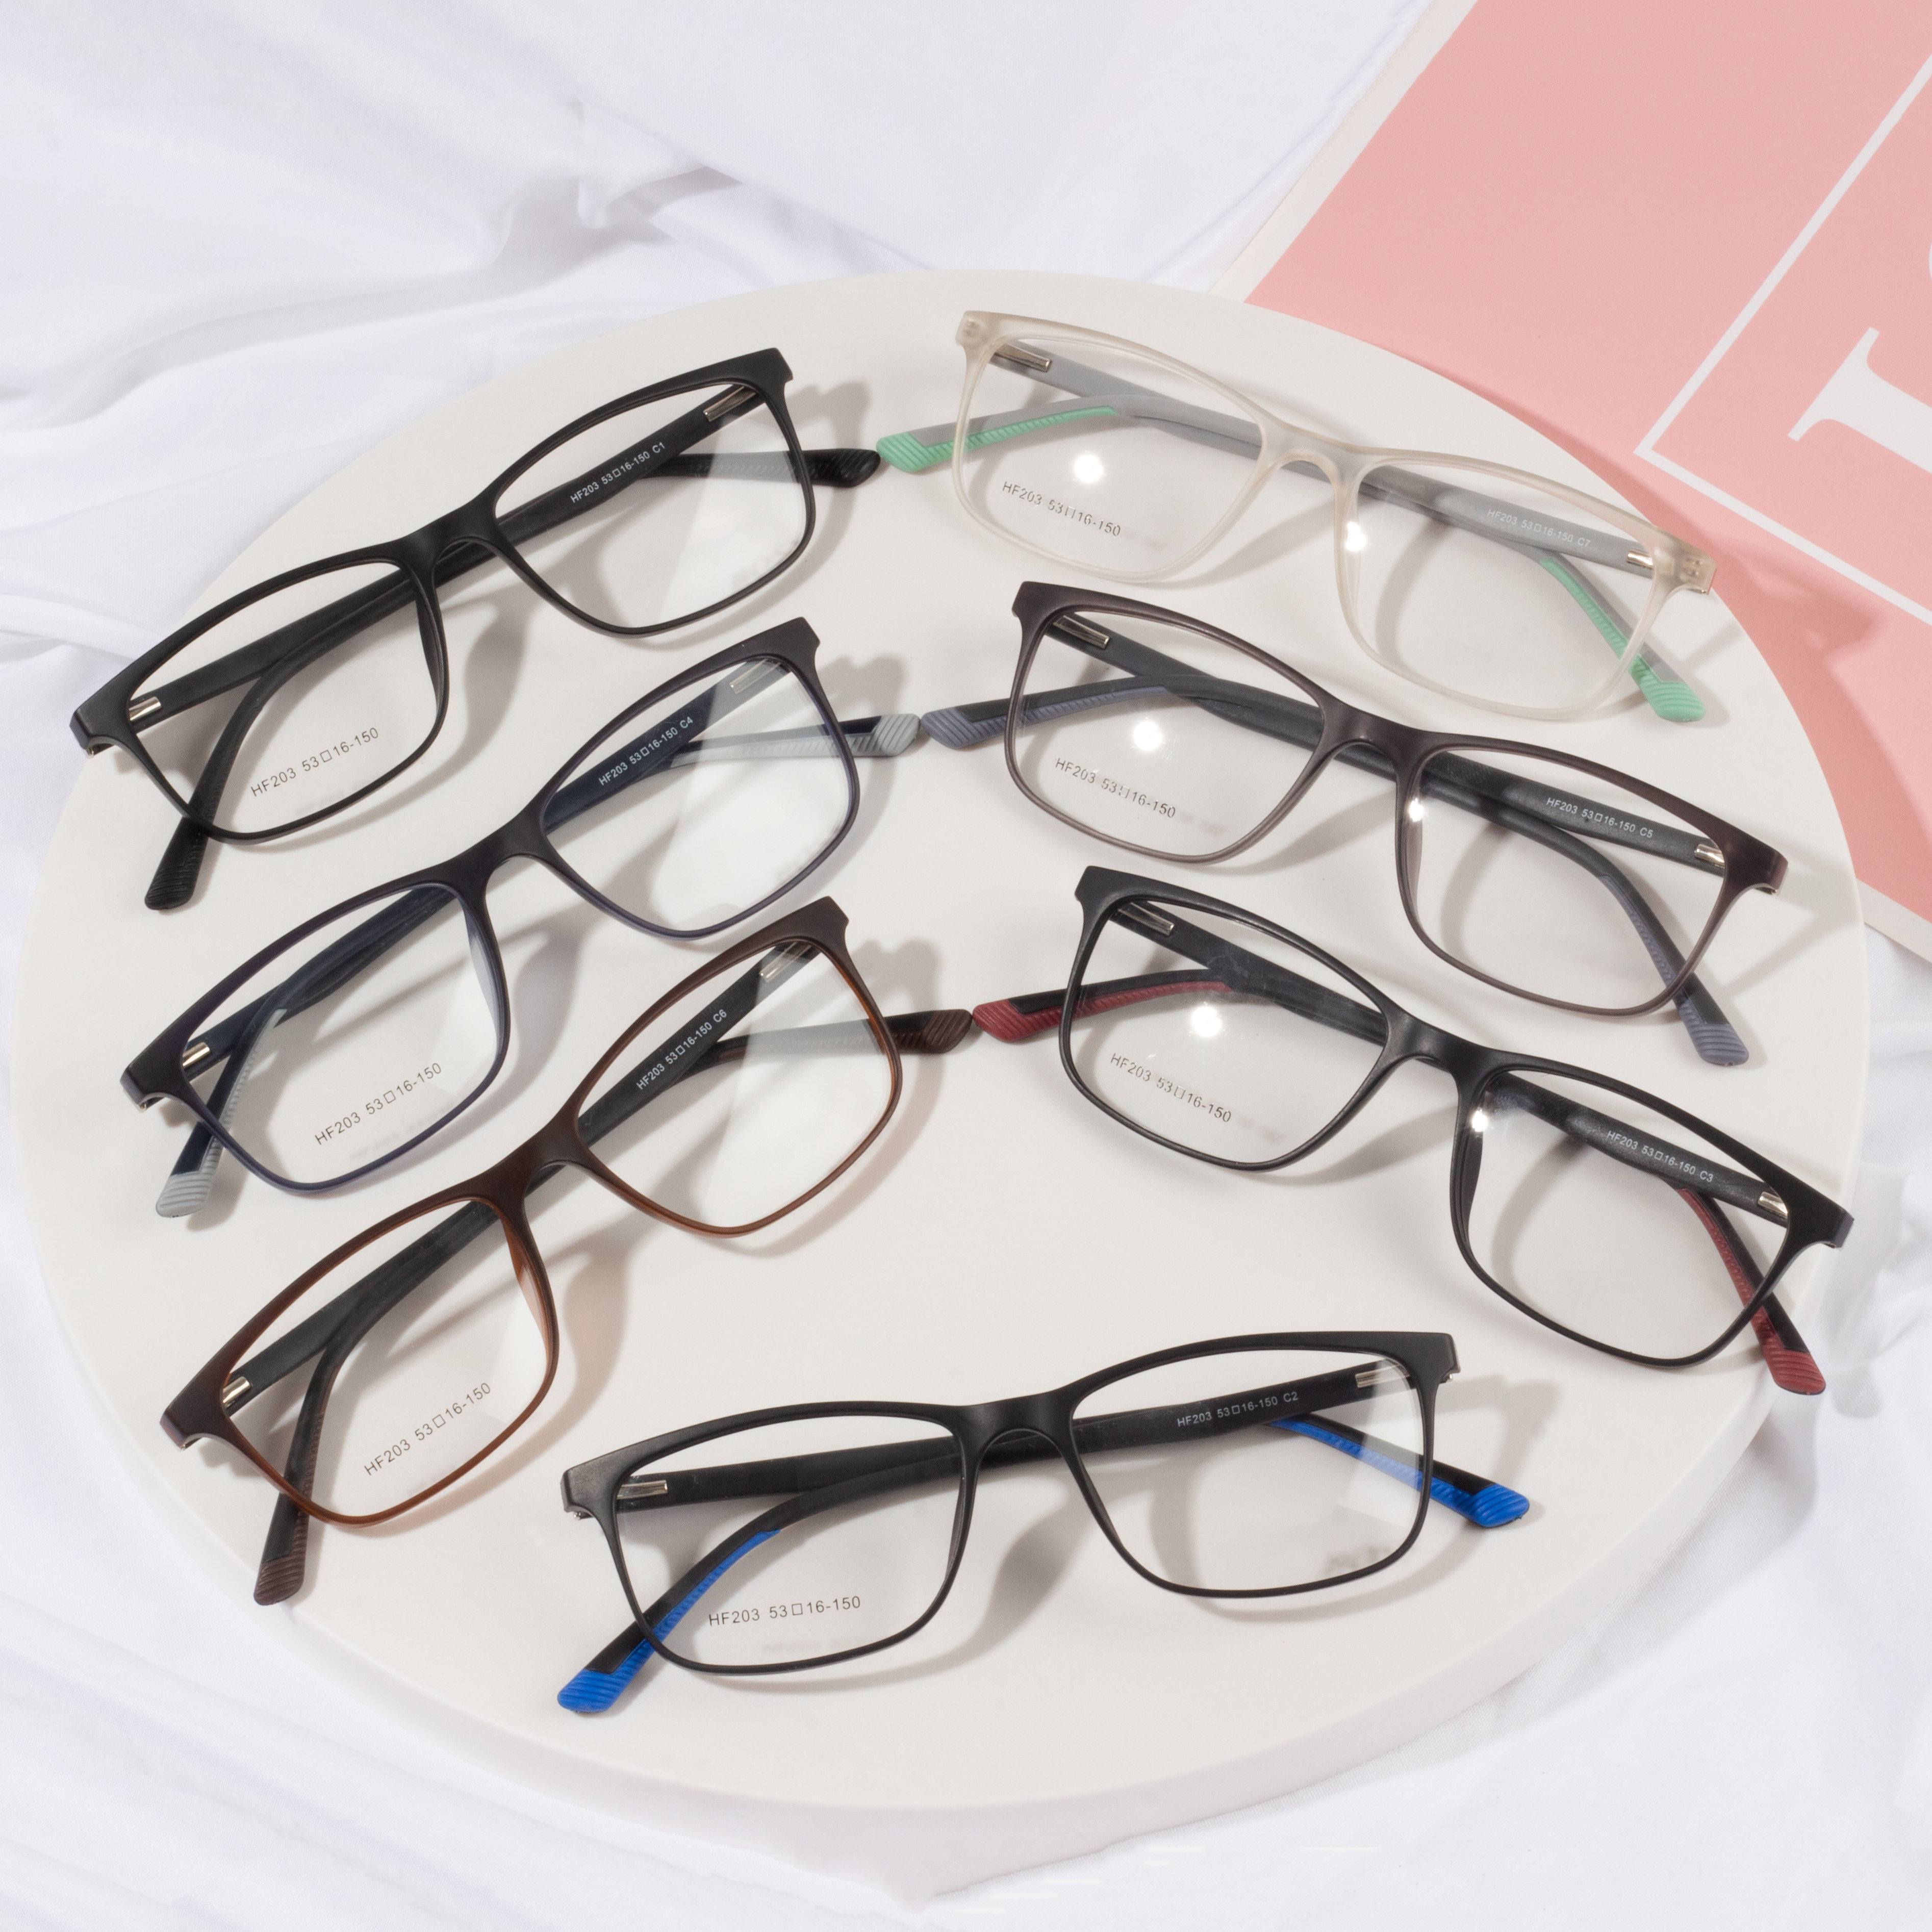 gruthannel moade TR90 brillen frames